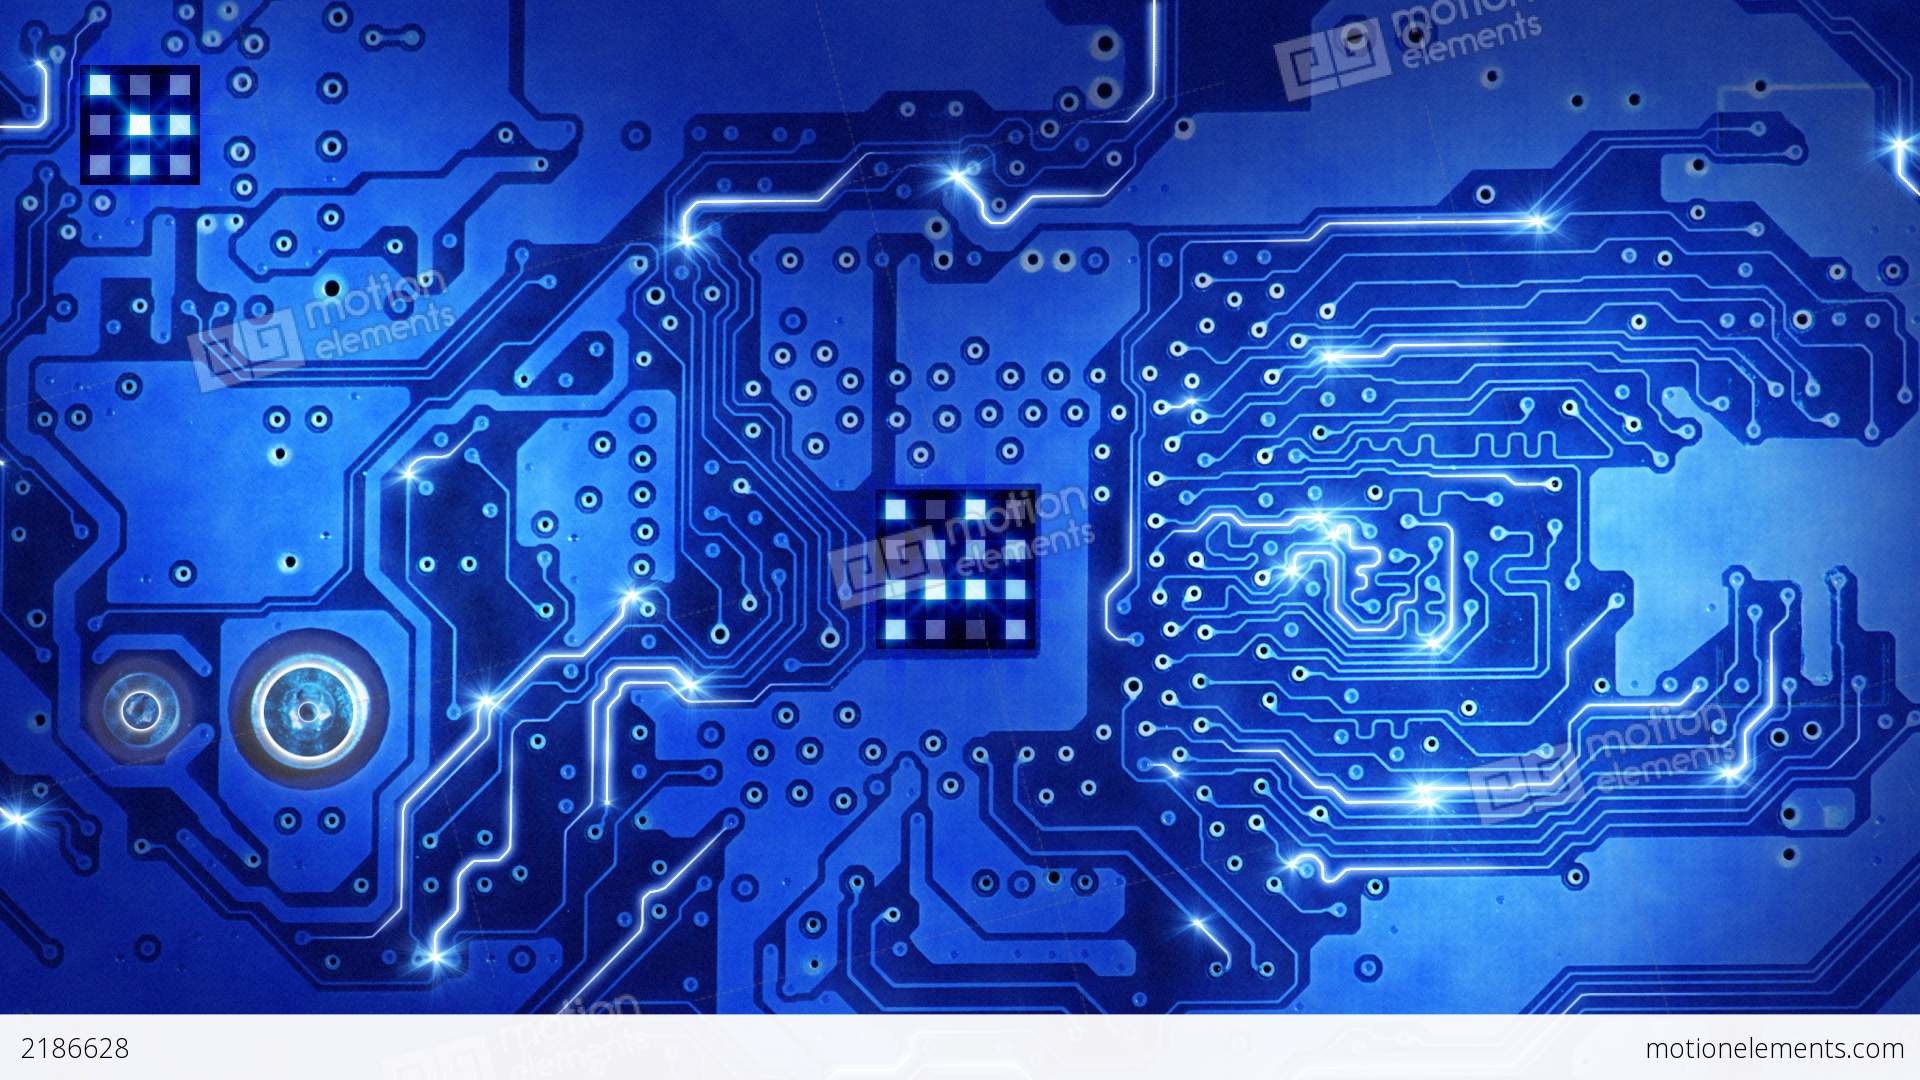 motherboard wallpaper,blau,elektronisches ingenieurwesen,hauptplatine,elektronik,elektronisches bauteil